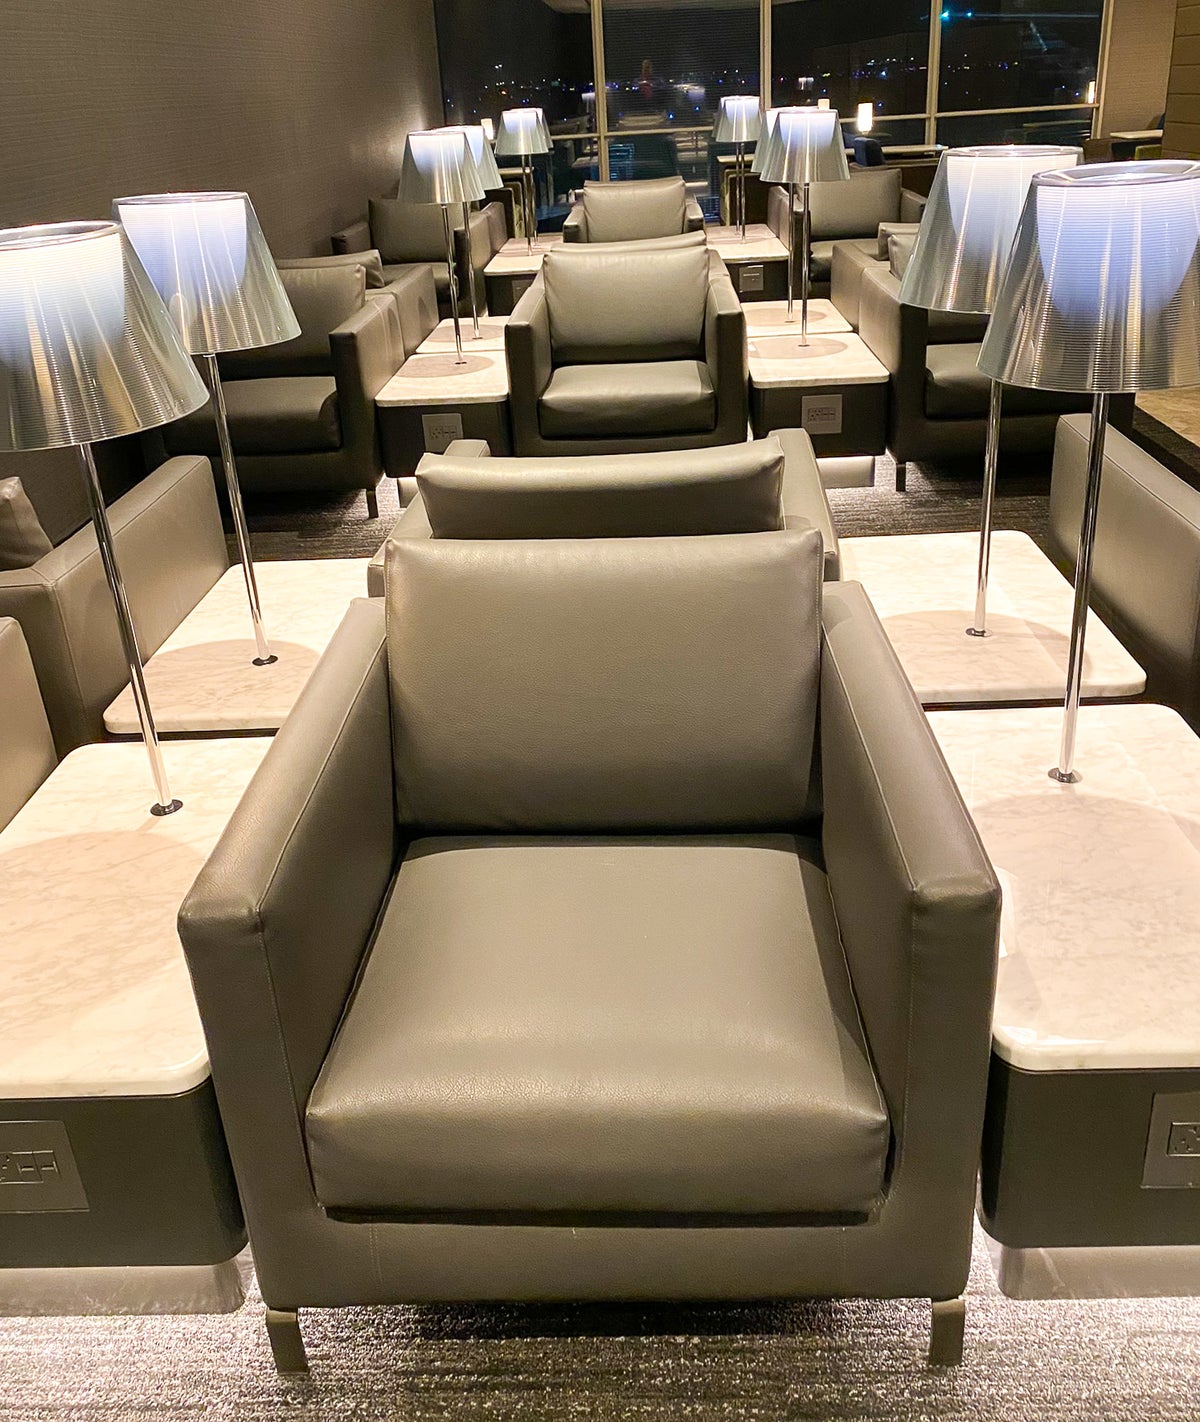 United Polaris Lounge ORD Extra Seats